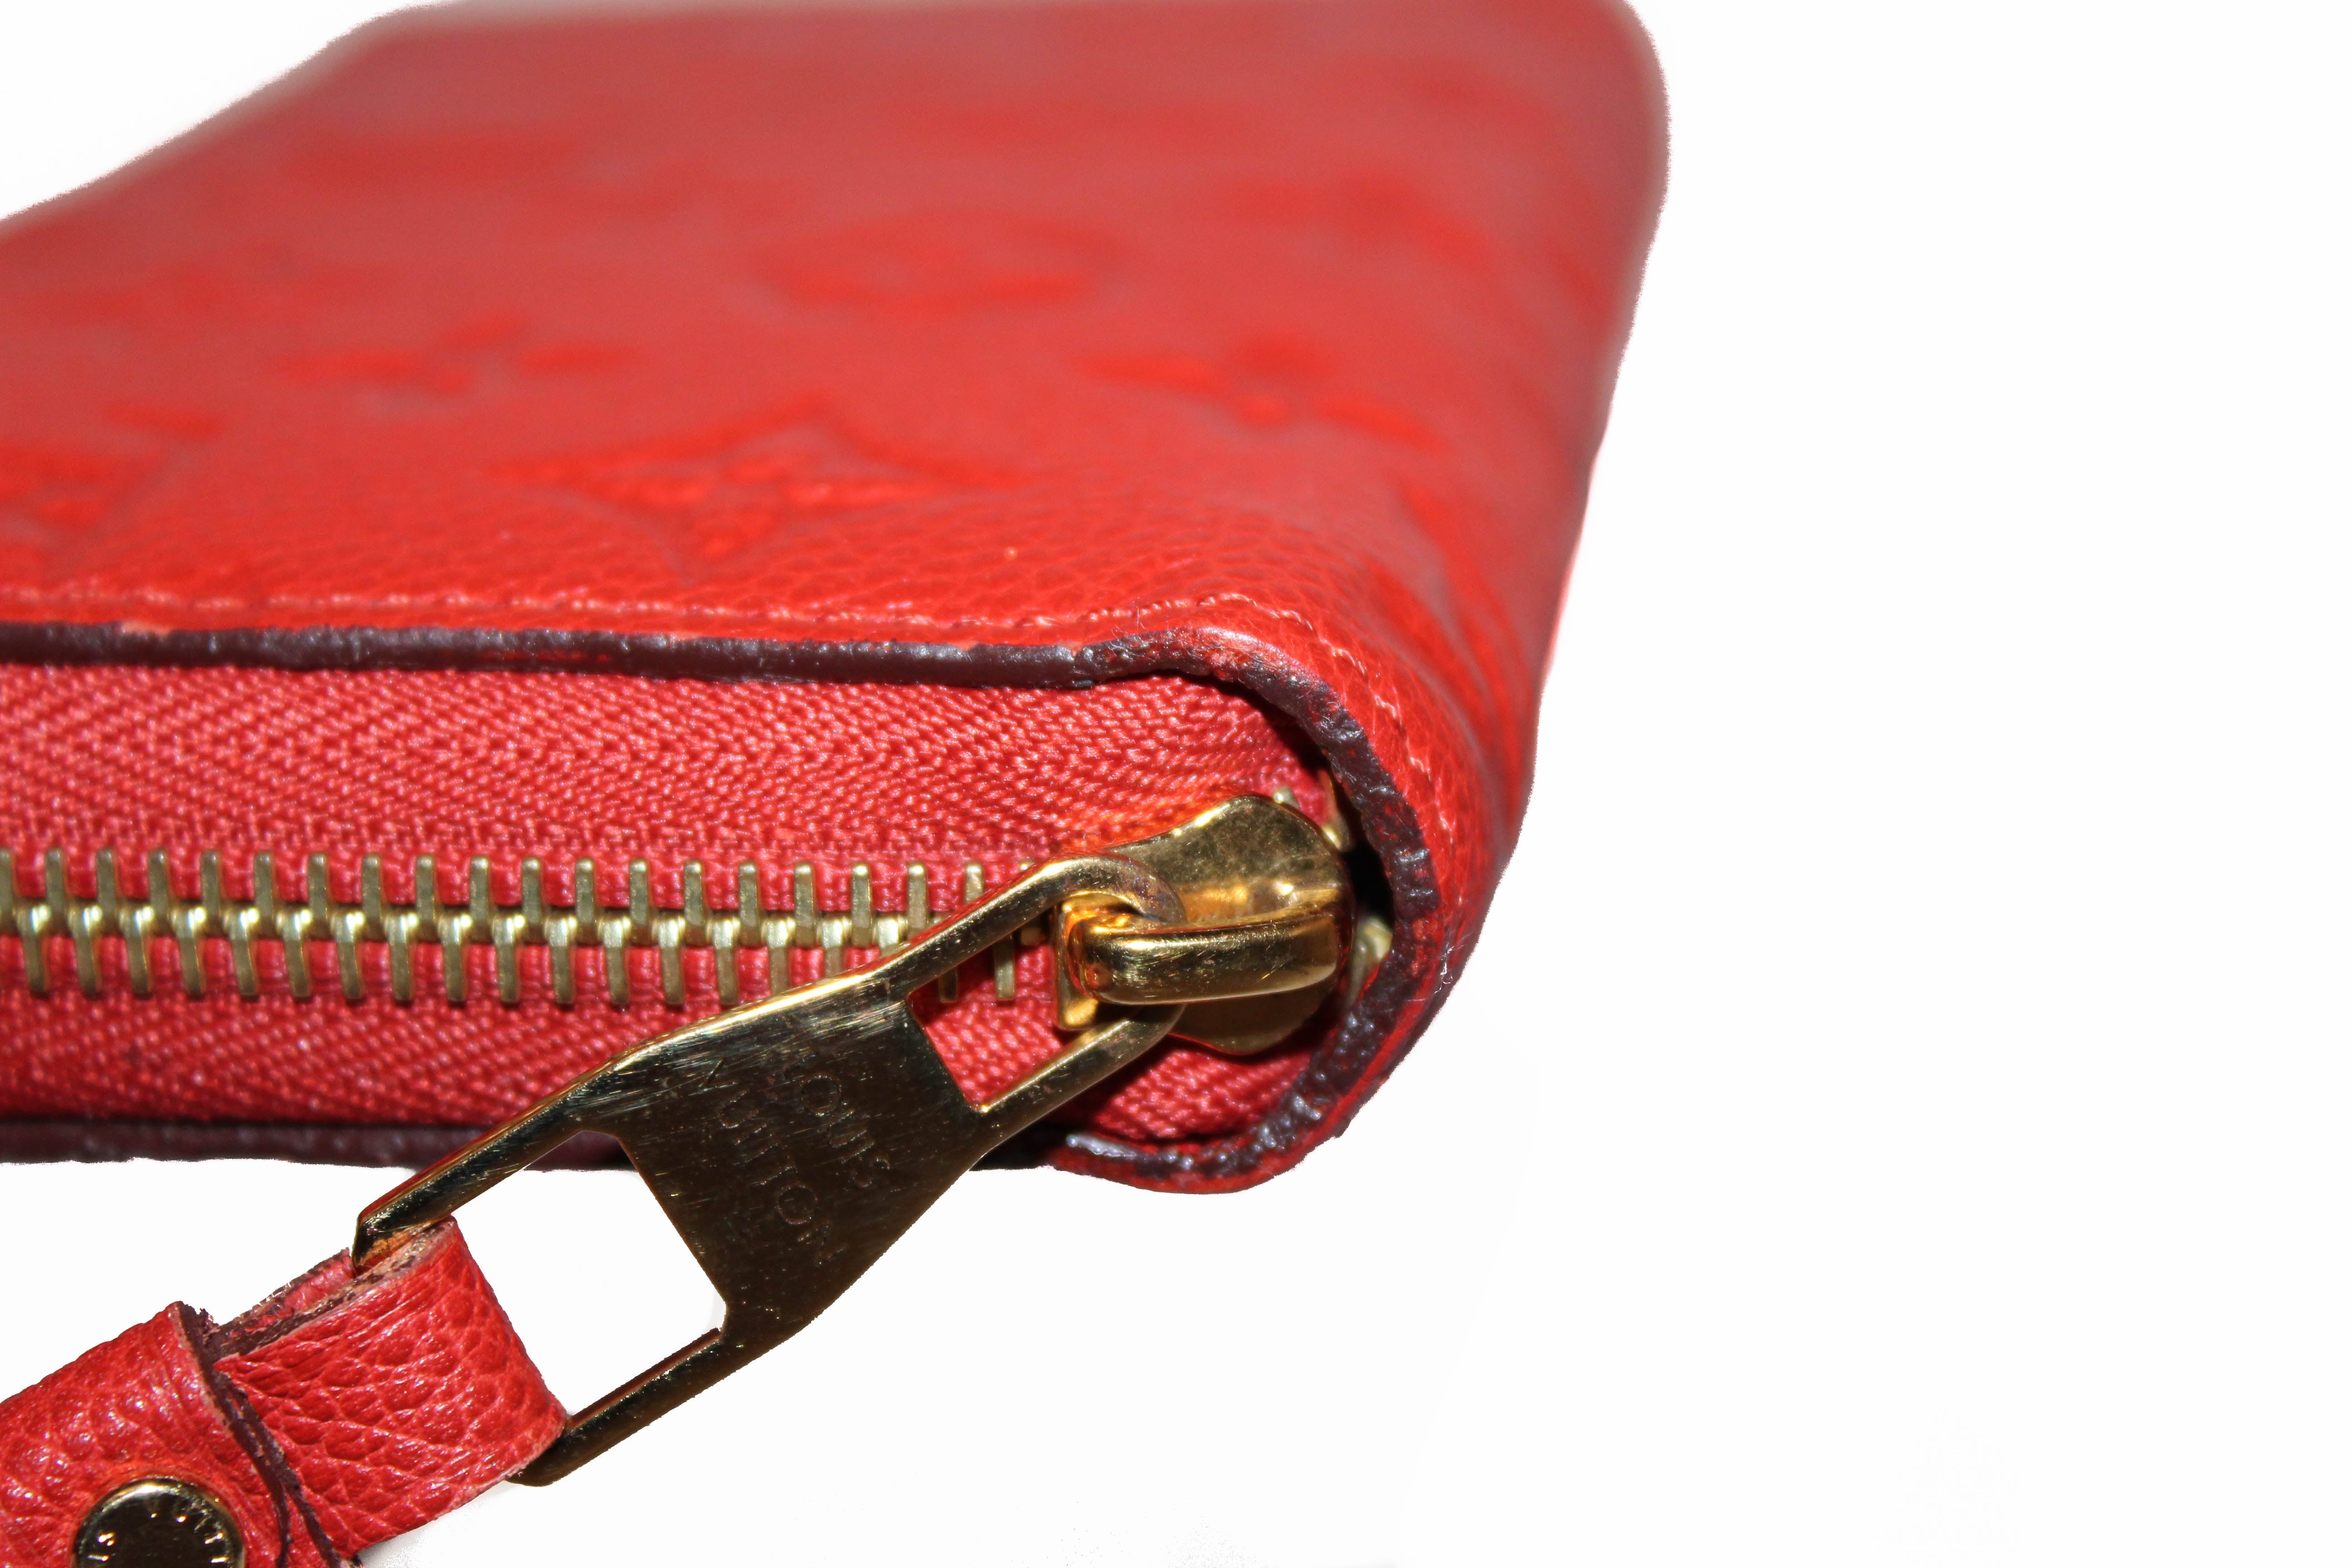 Authentic Louis Vuitton Orange Red Orient Monogram Empreinte Leather Zippy Wallet